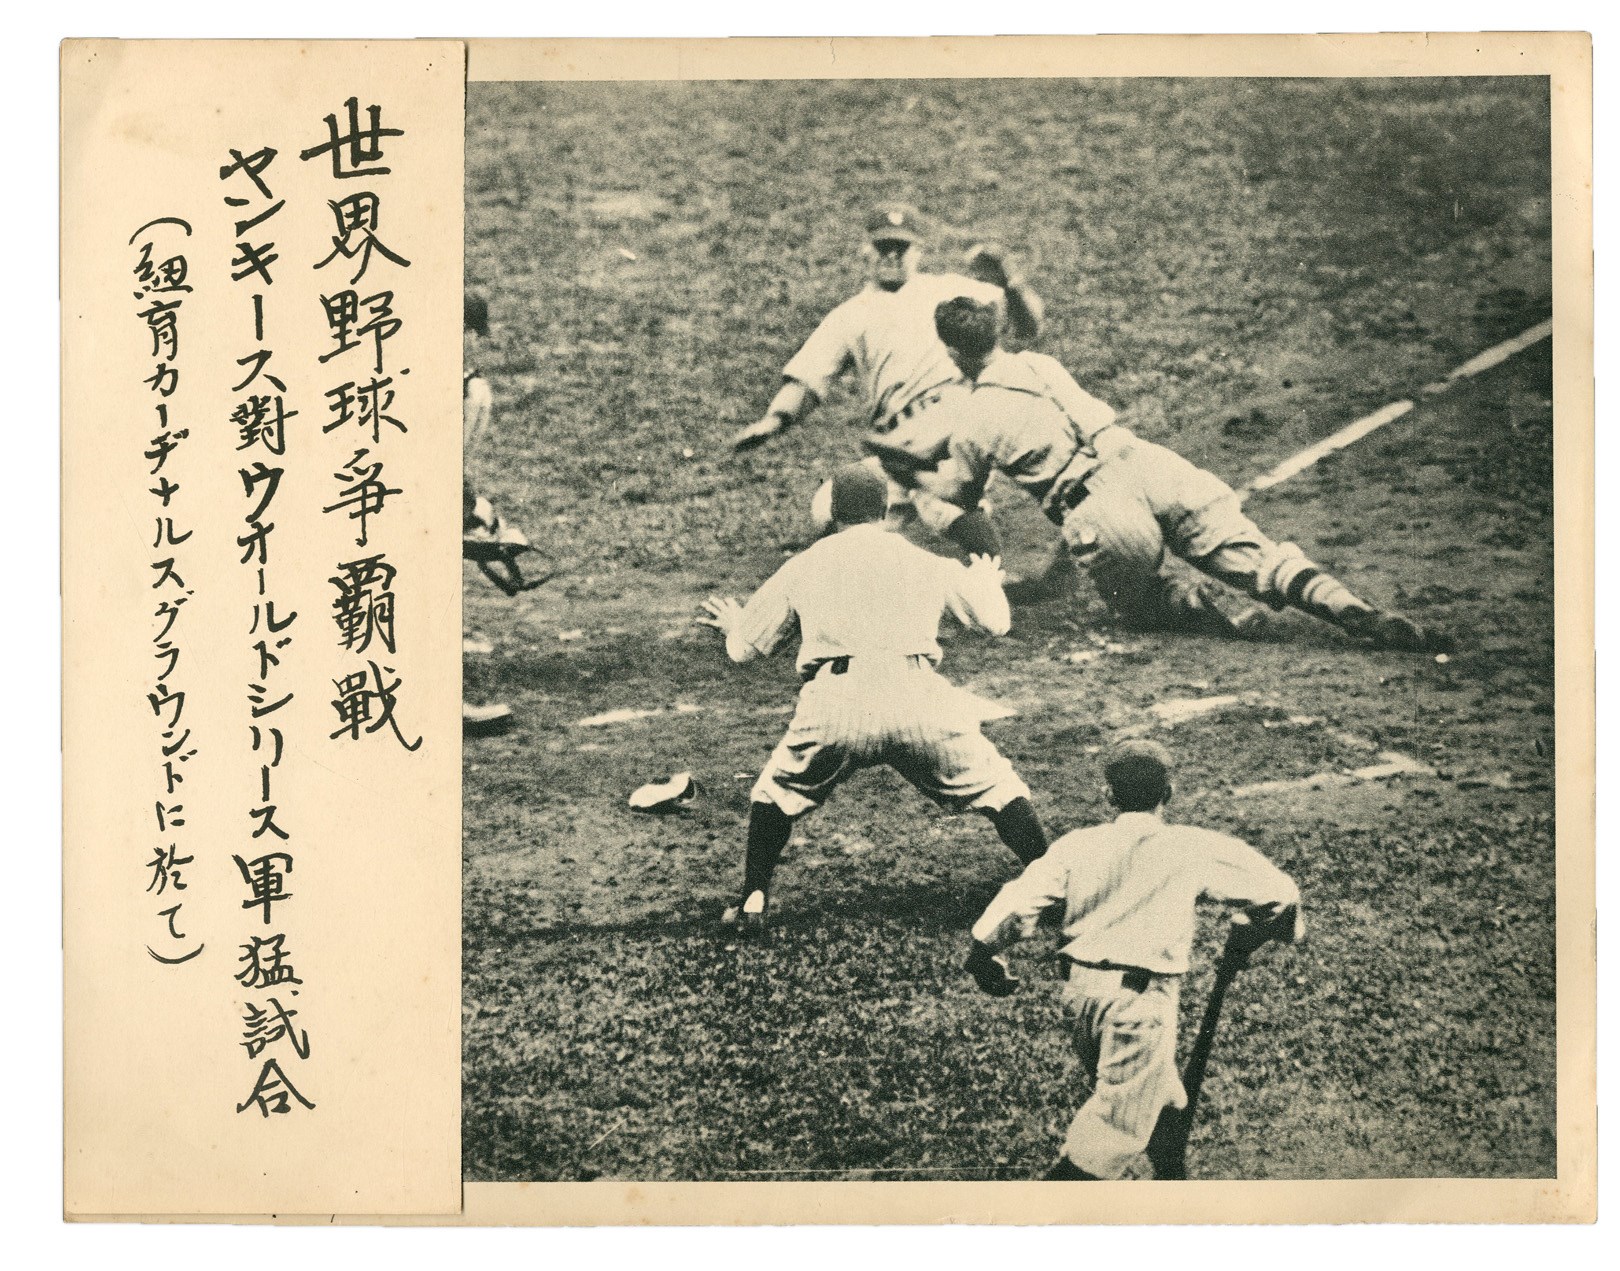 1926 World Series Advertising Poster